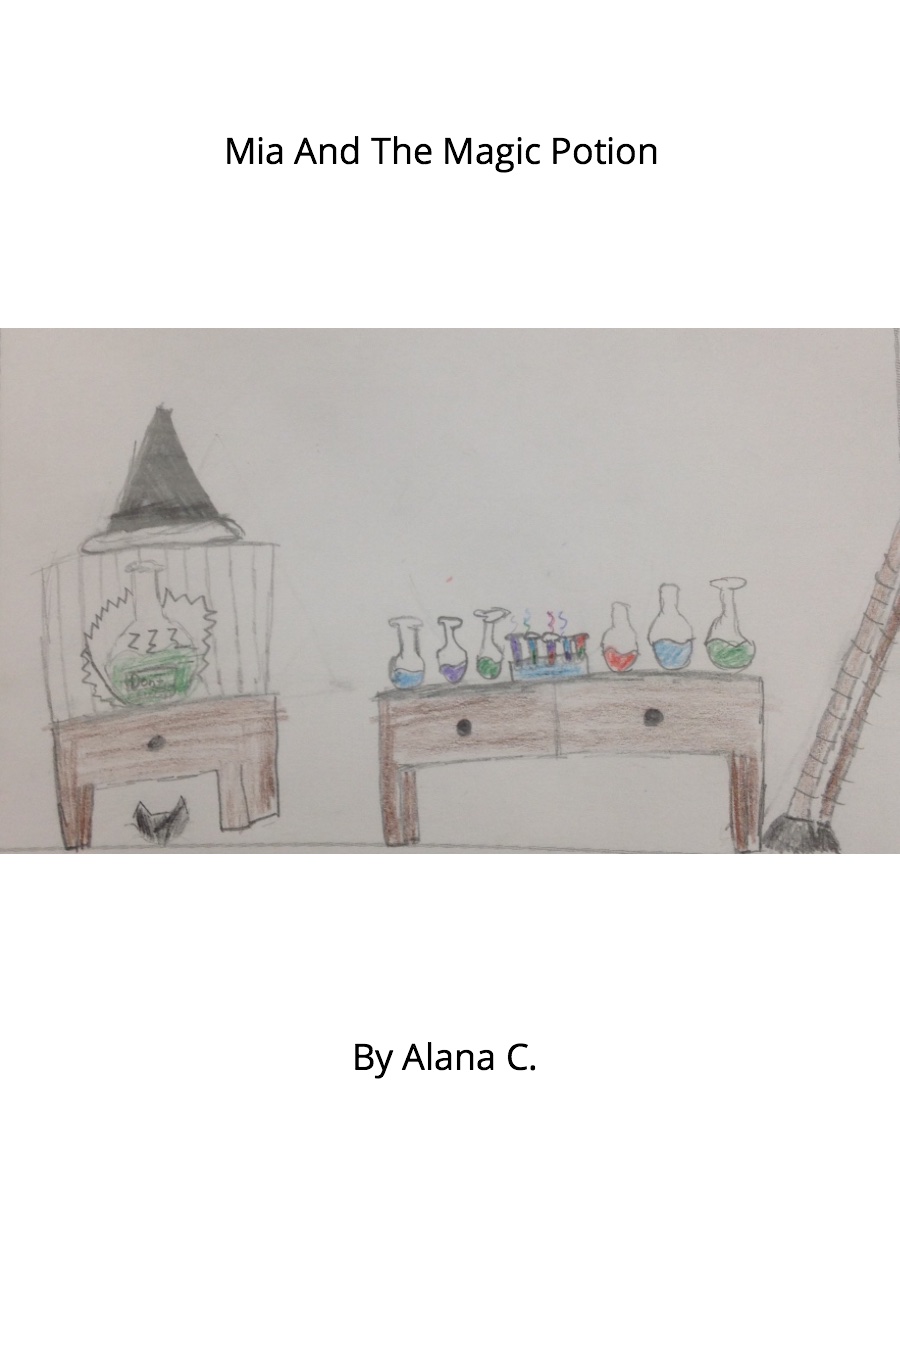 Mia and the Magic Potion By Alana C